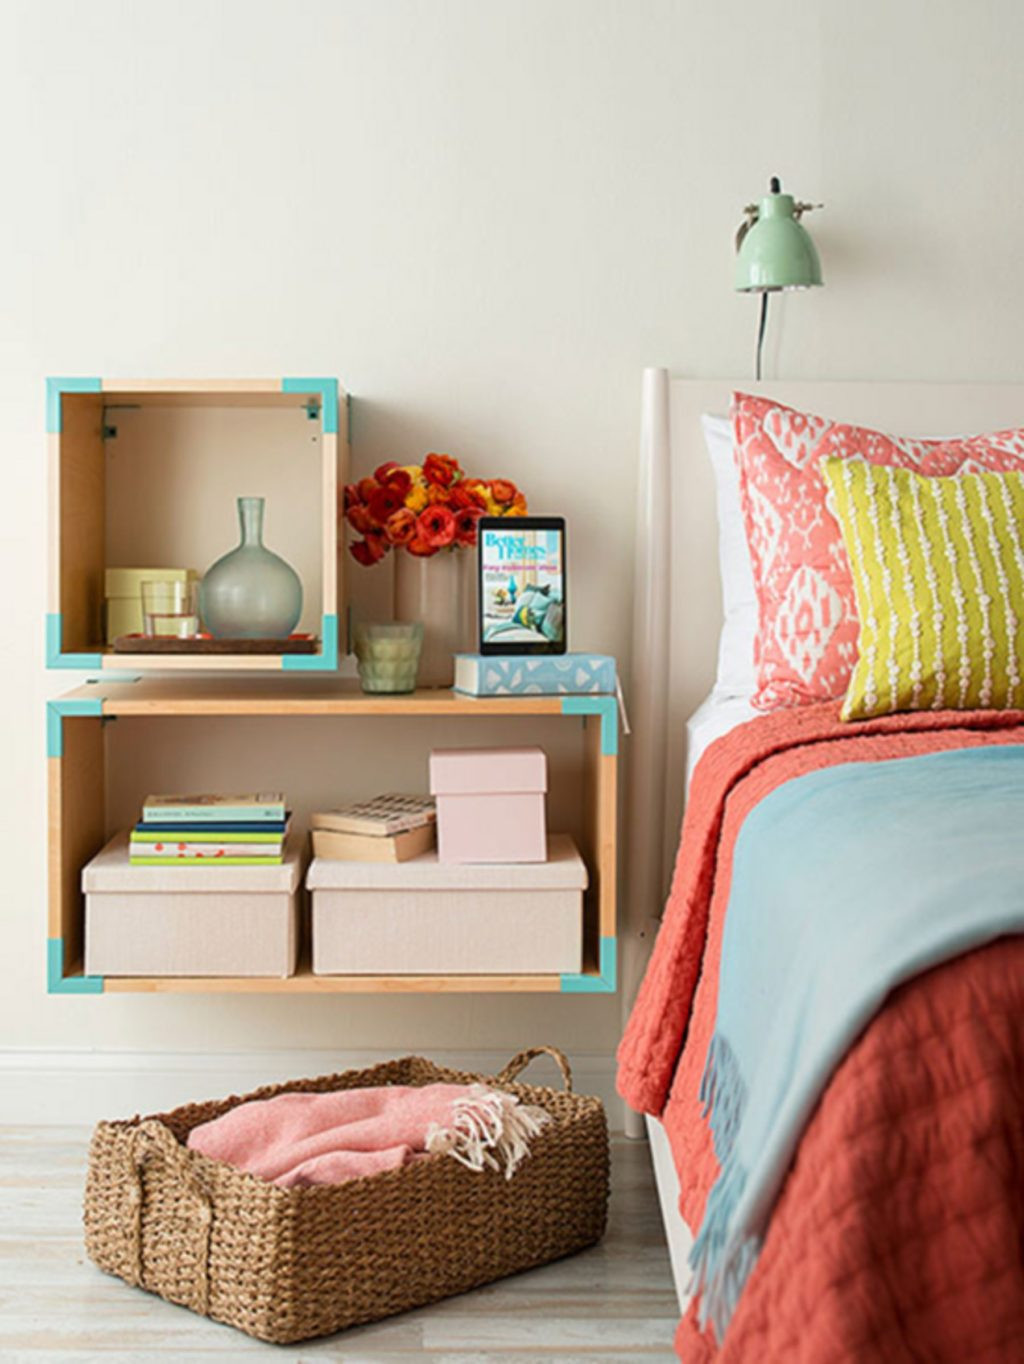 Cheap Bedroom Storage
 15 Creative Bedroom Storage Design Ideas – MOOLTON